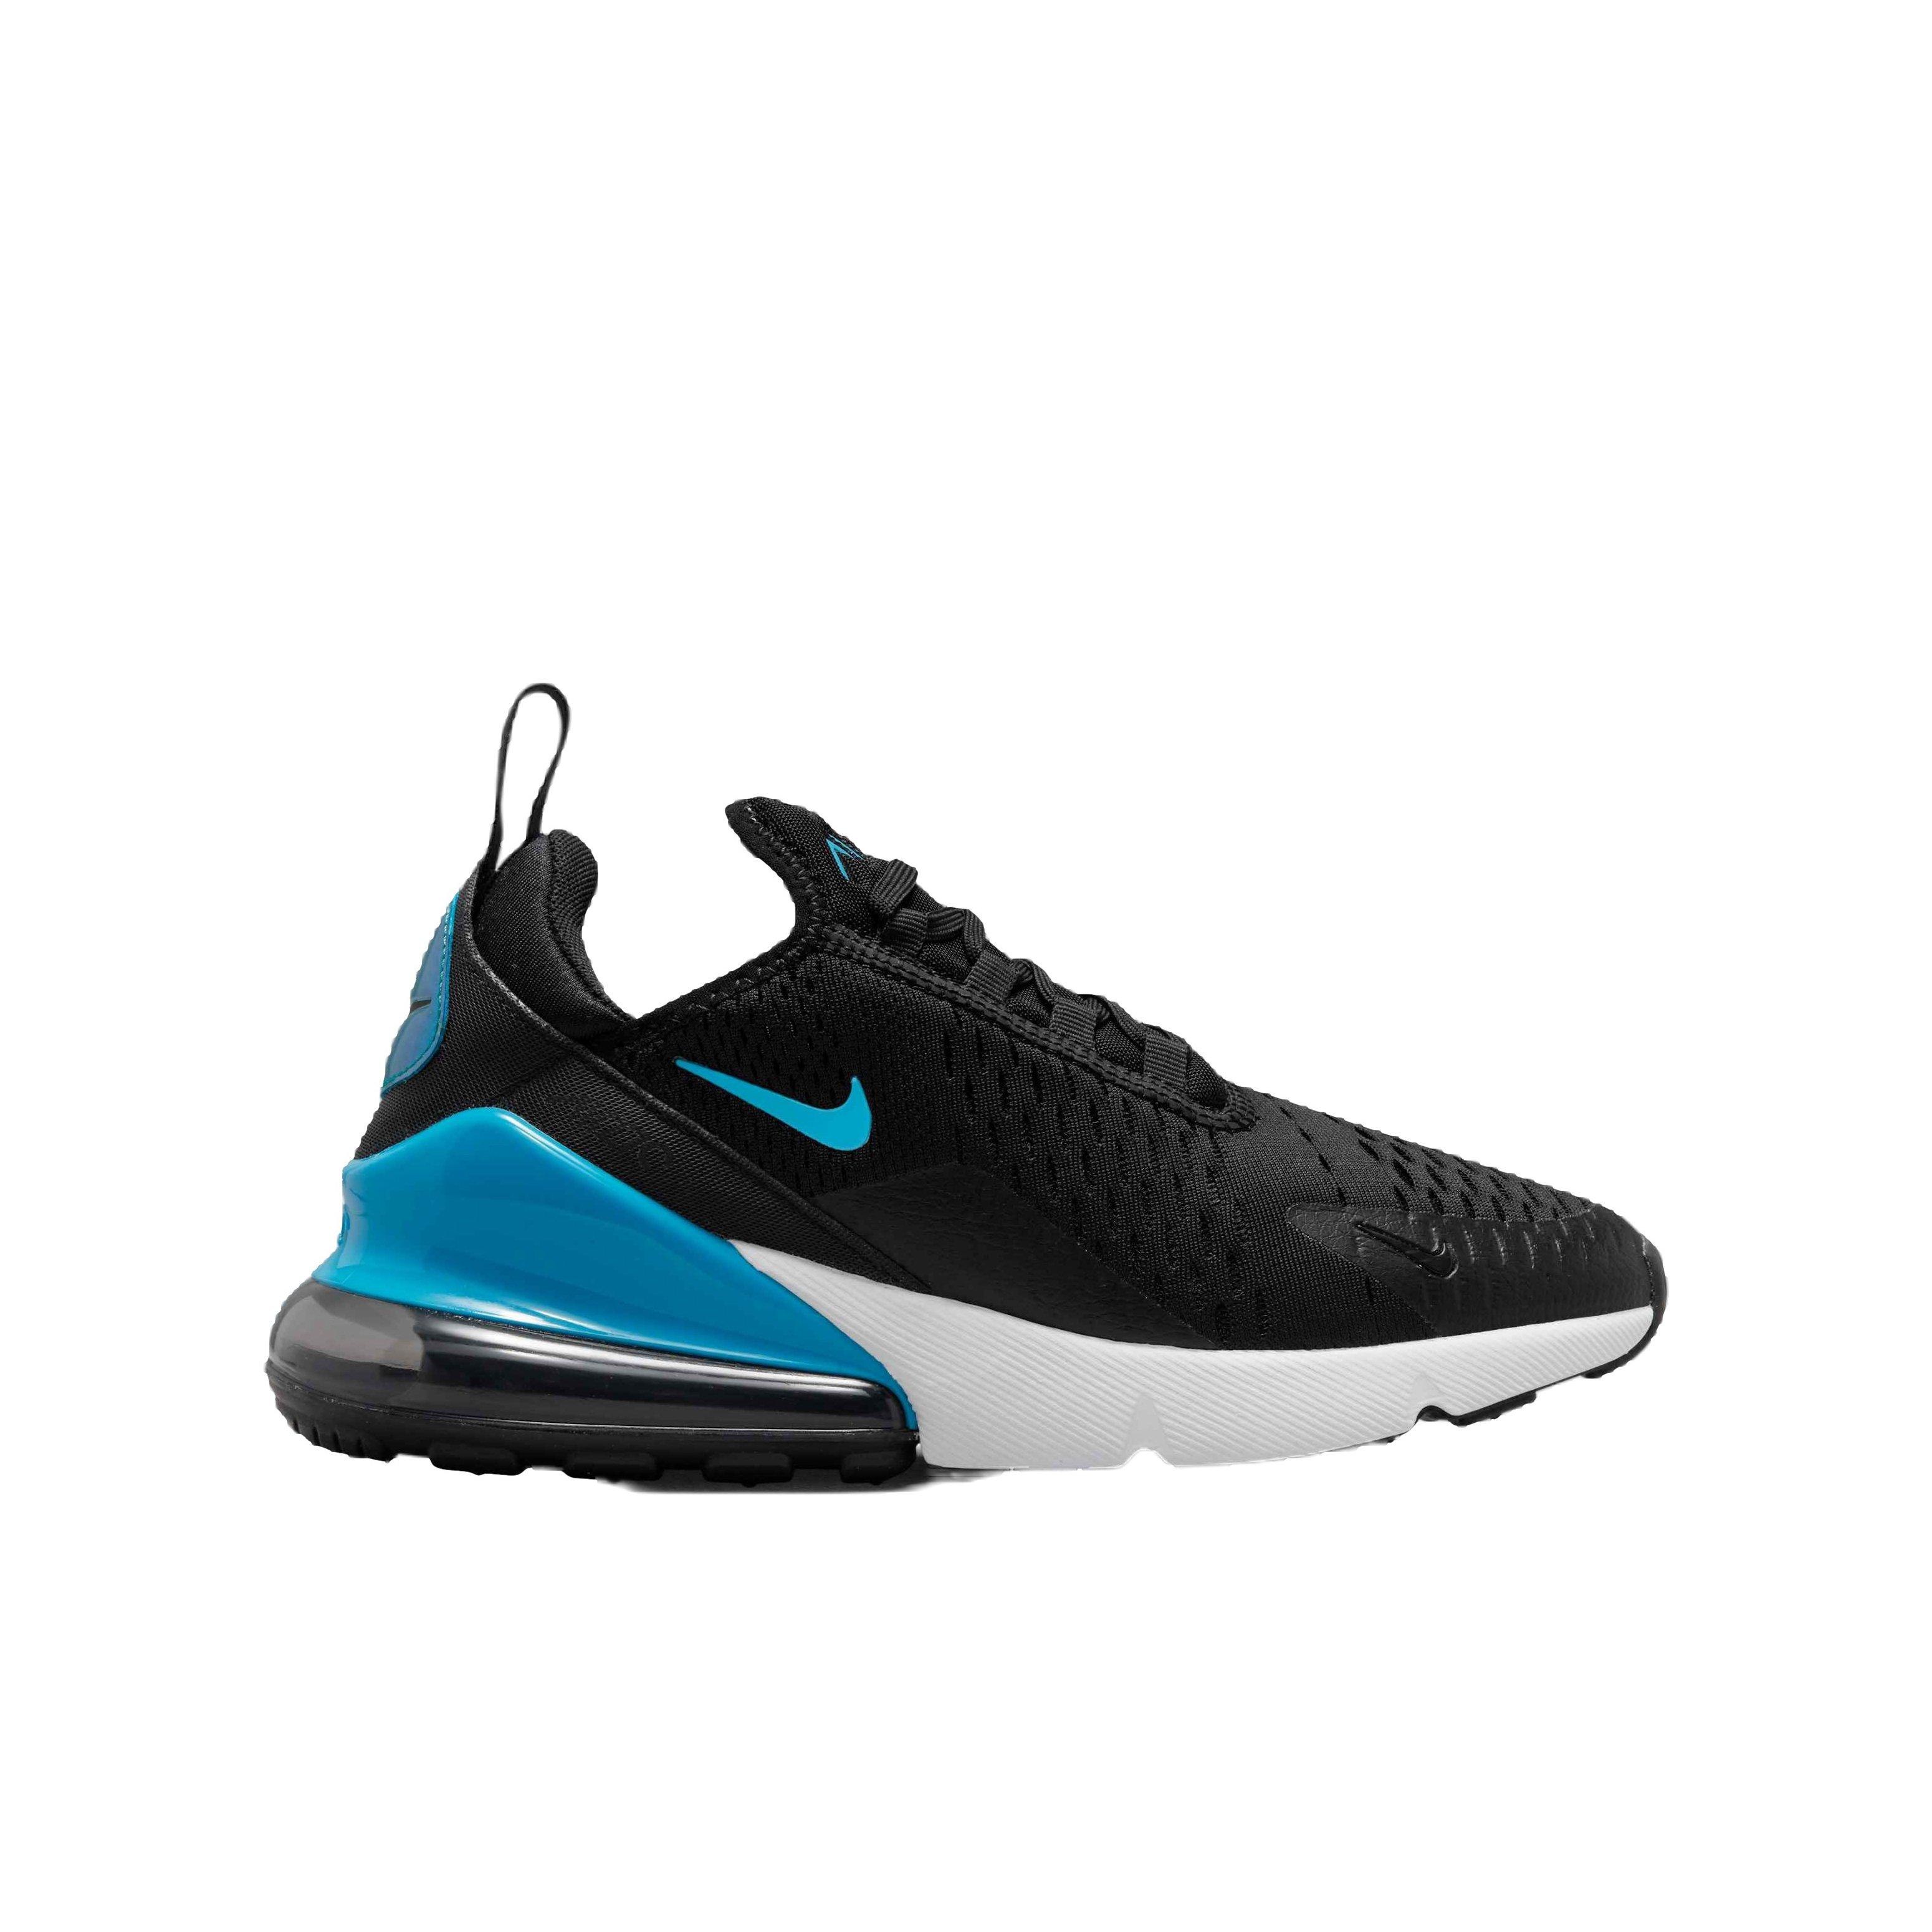 Nike Boys Air Max 270 - Shoes White/Blue/Black Size 05.0